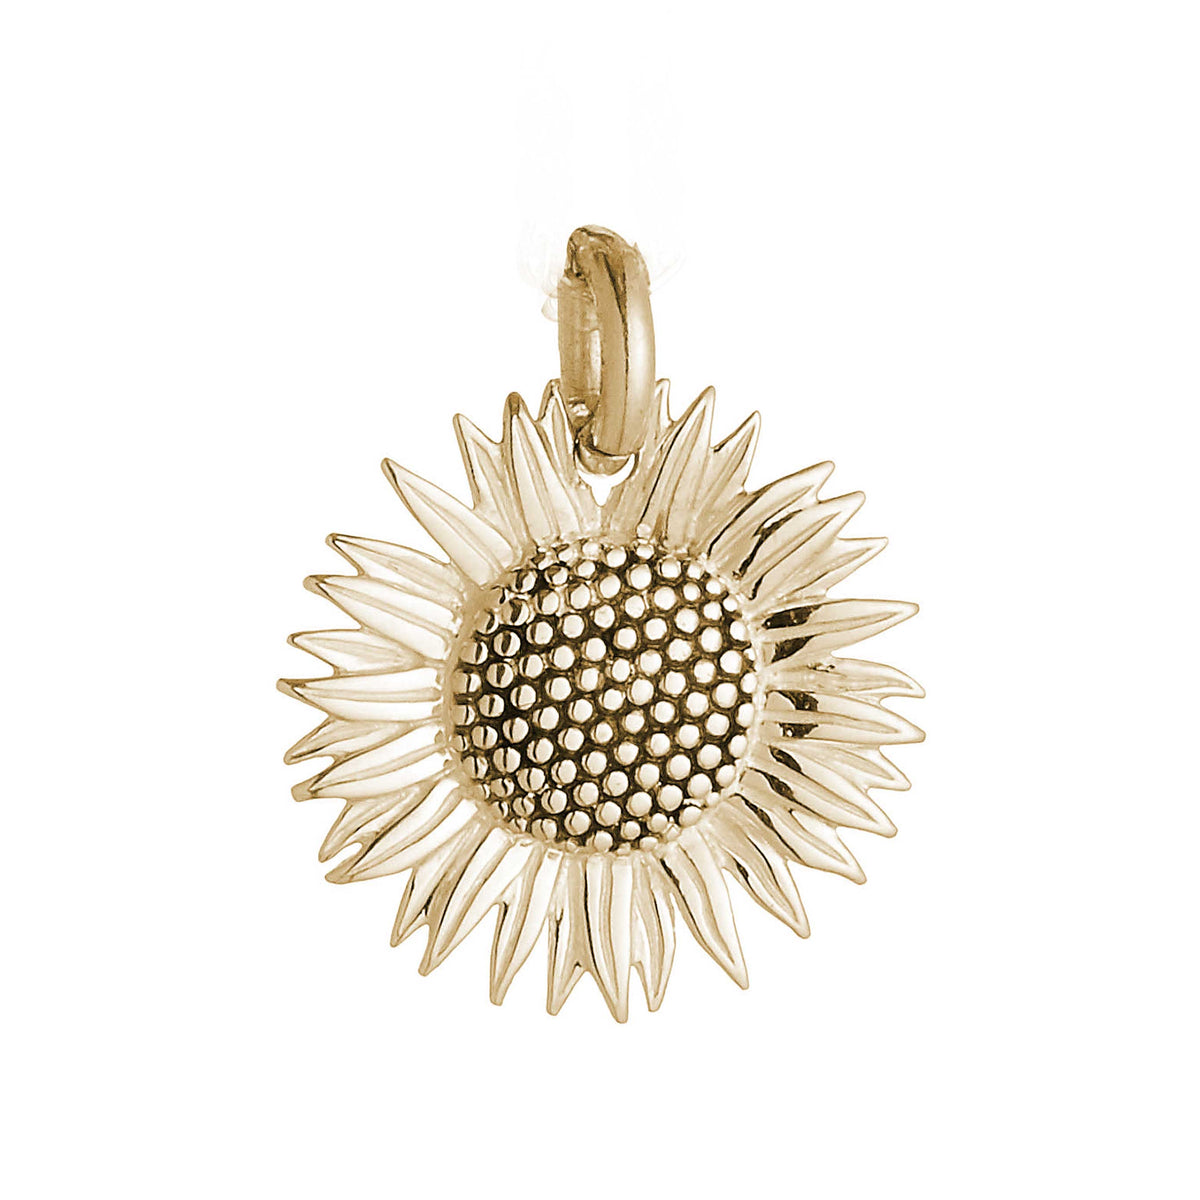 solid gold sunflower bracelet necklace charm 9 carat made in UK scarlett jewellery